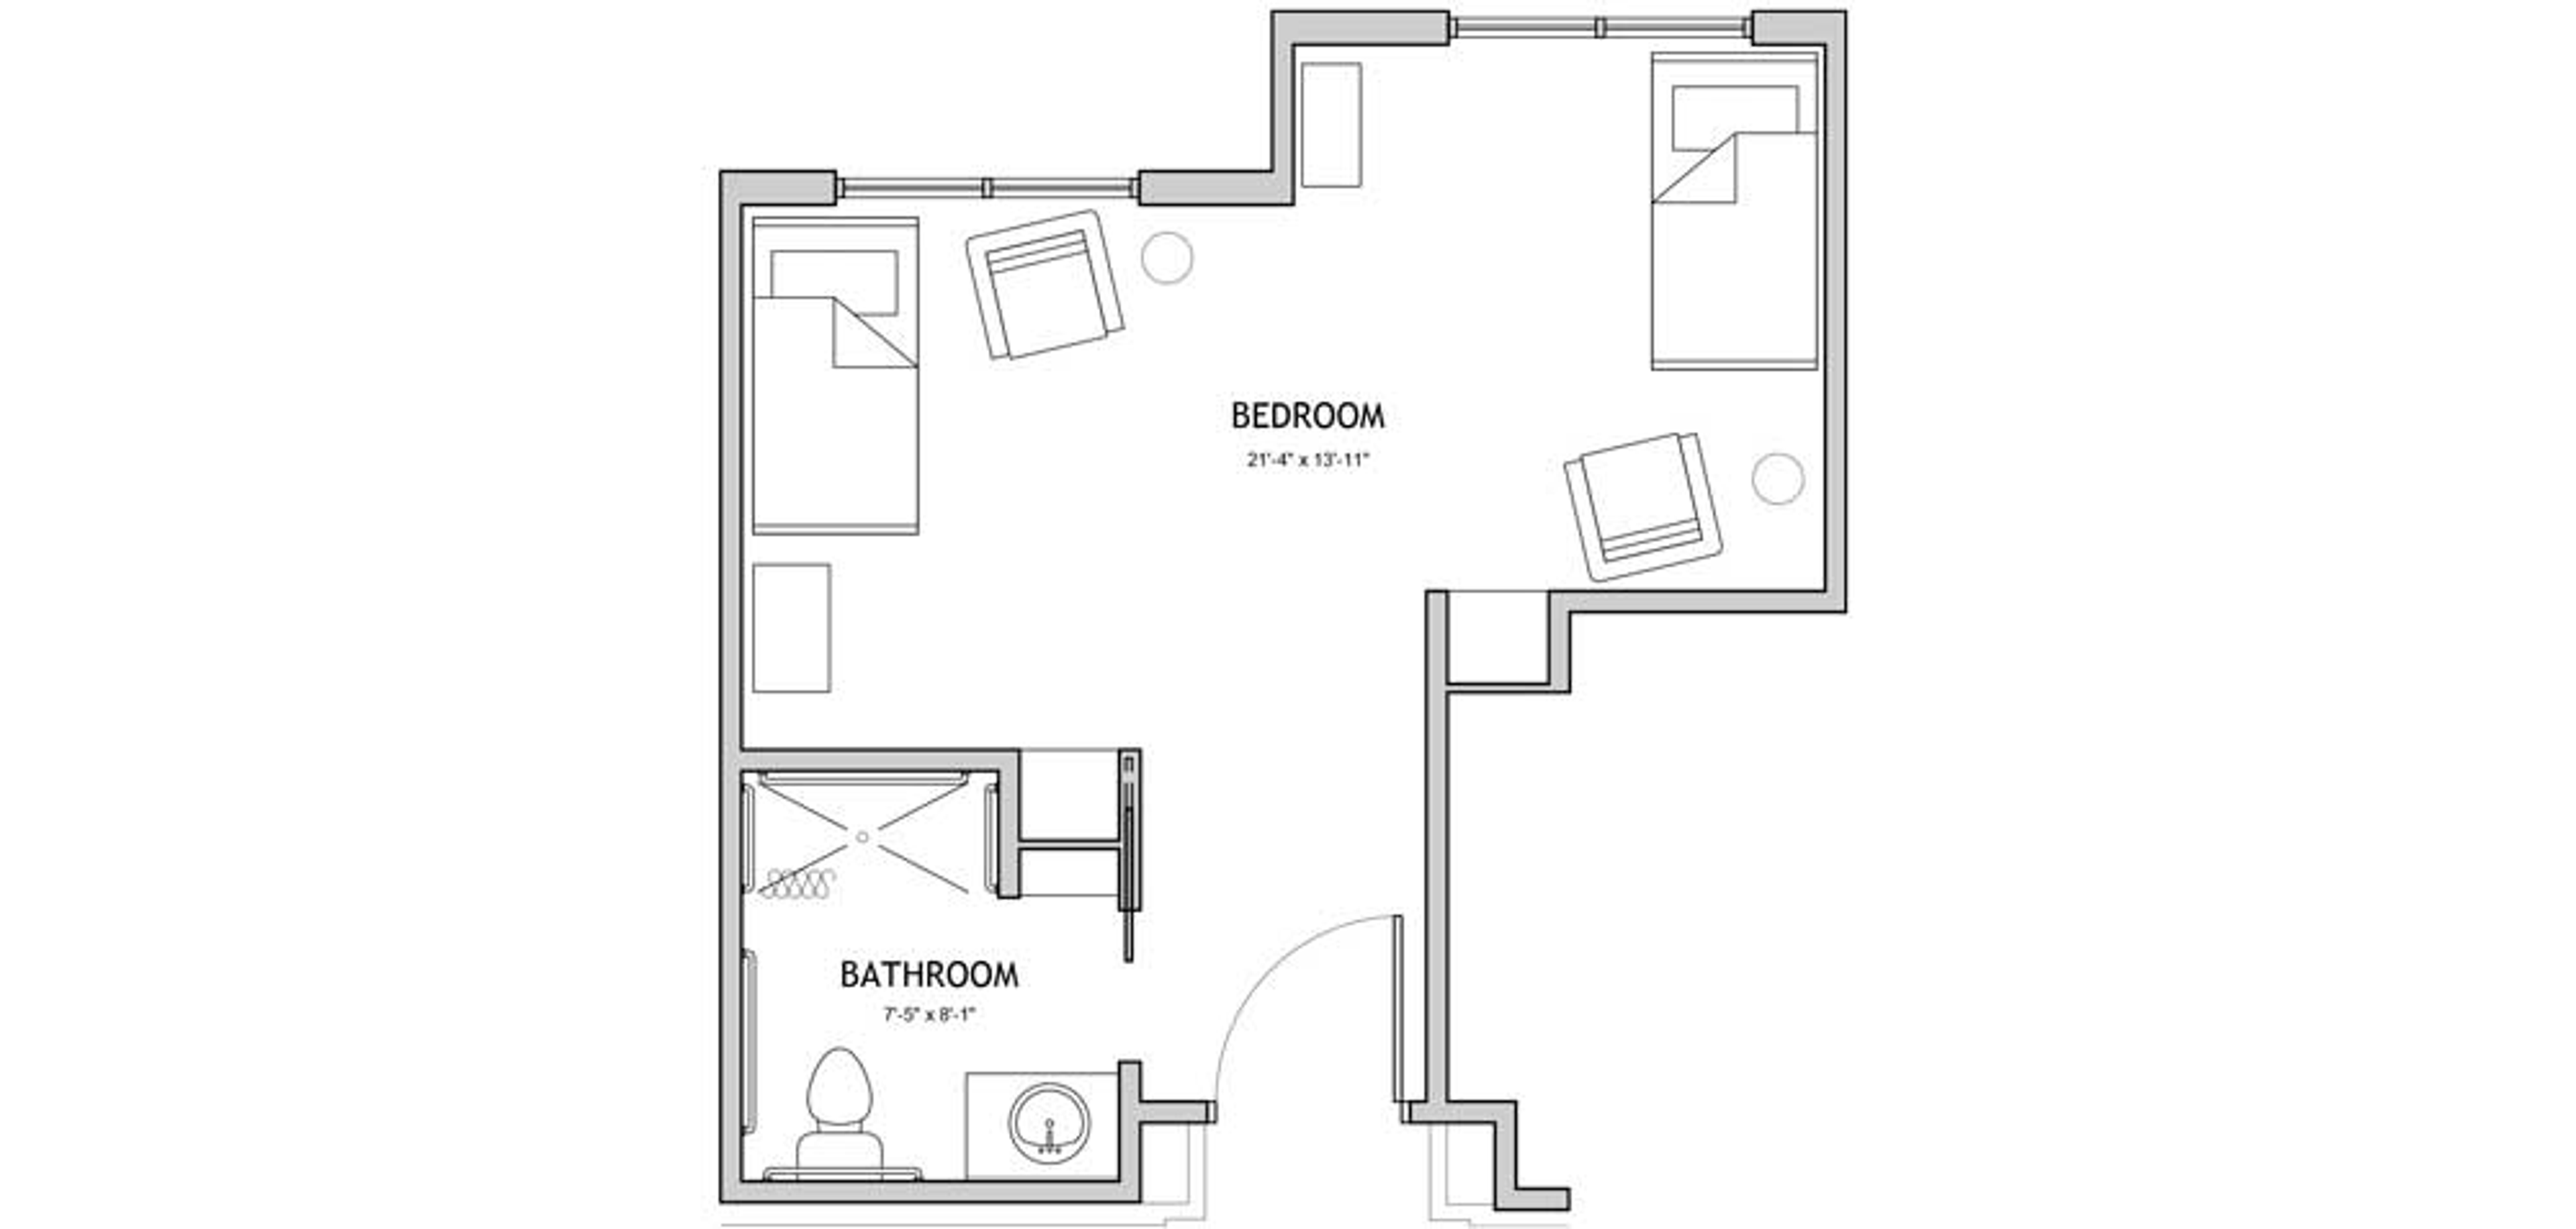 Floorplan - The Auberge at Onion Creek - Studio Semi-private , 381 sq. ft. Memory Care